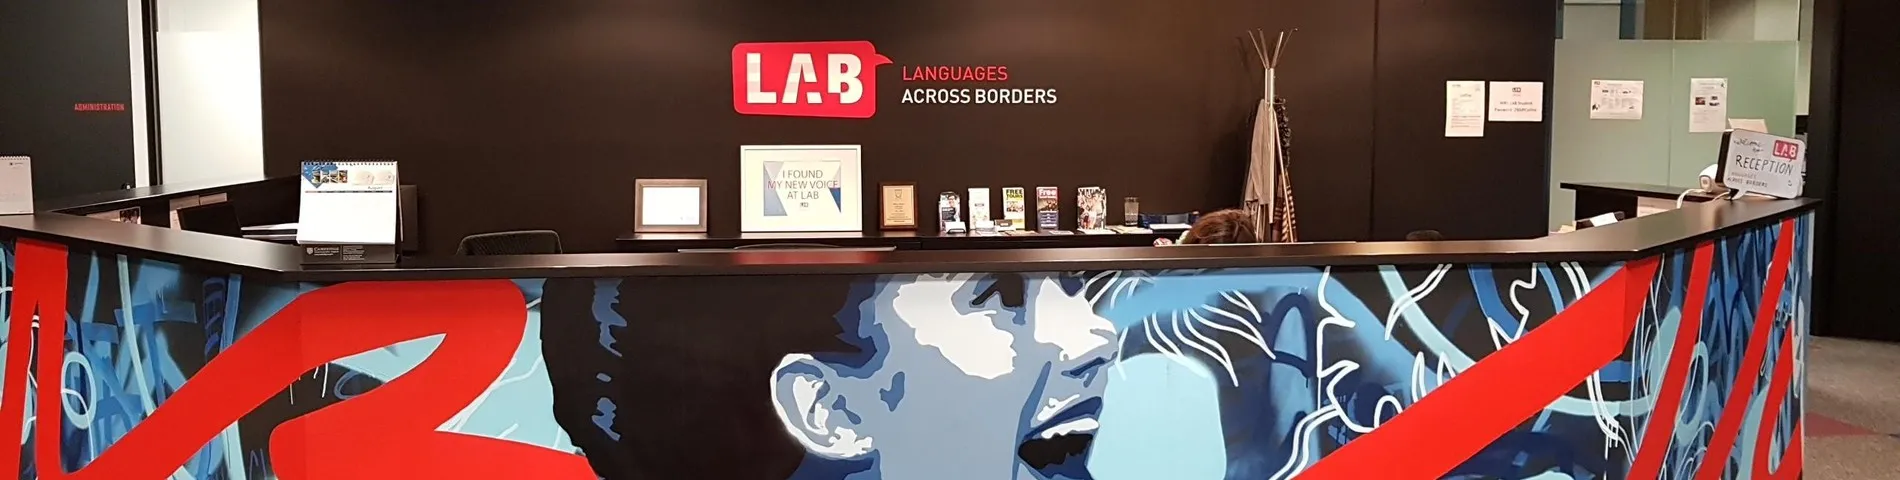 LAB - Languages Across Borders immagine 1